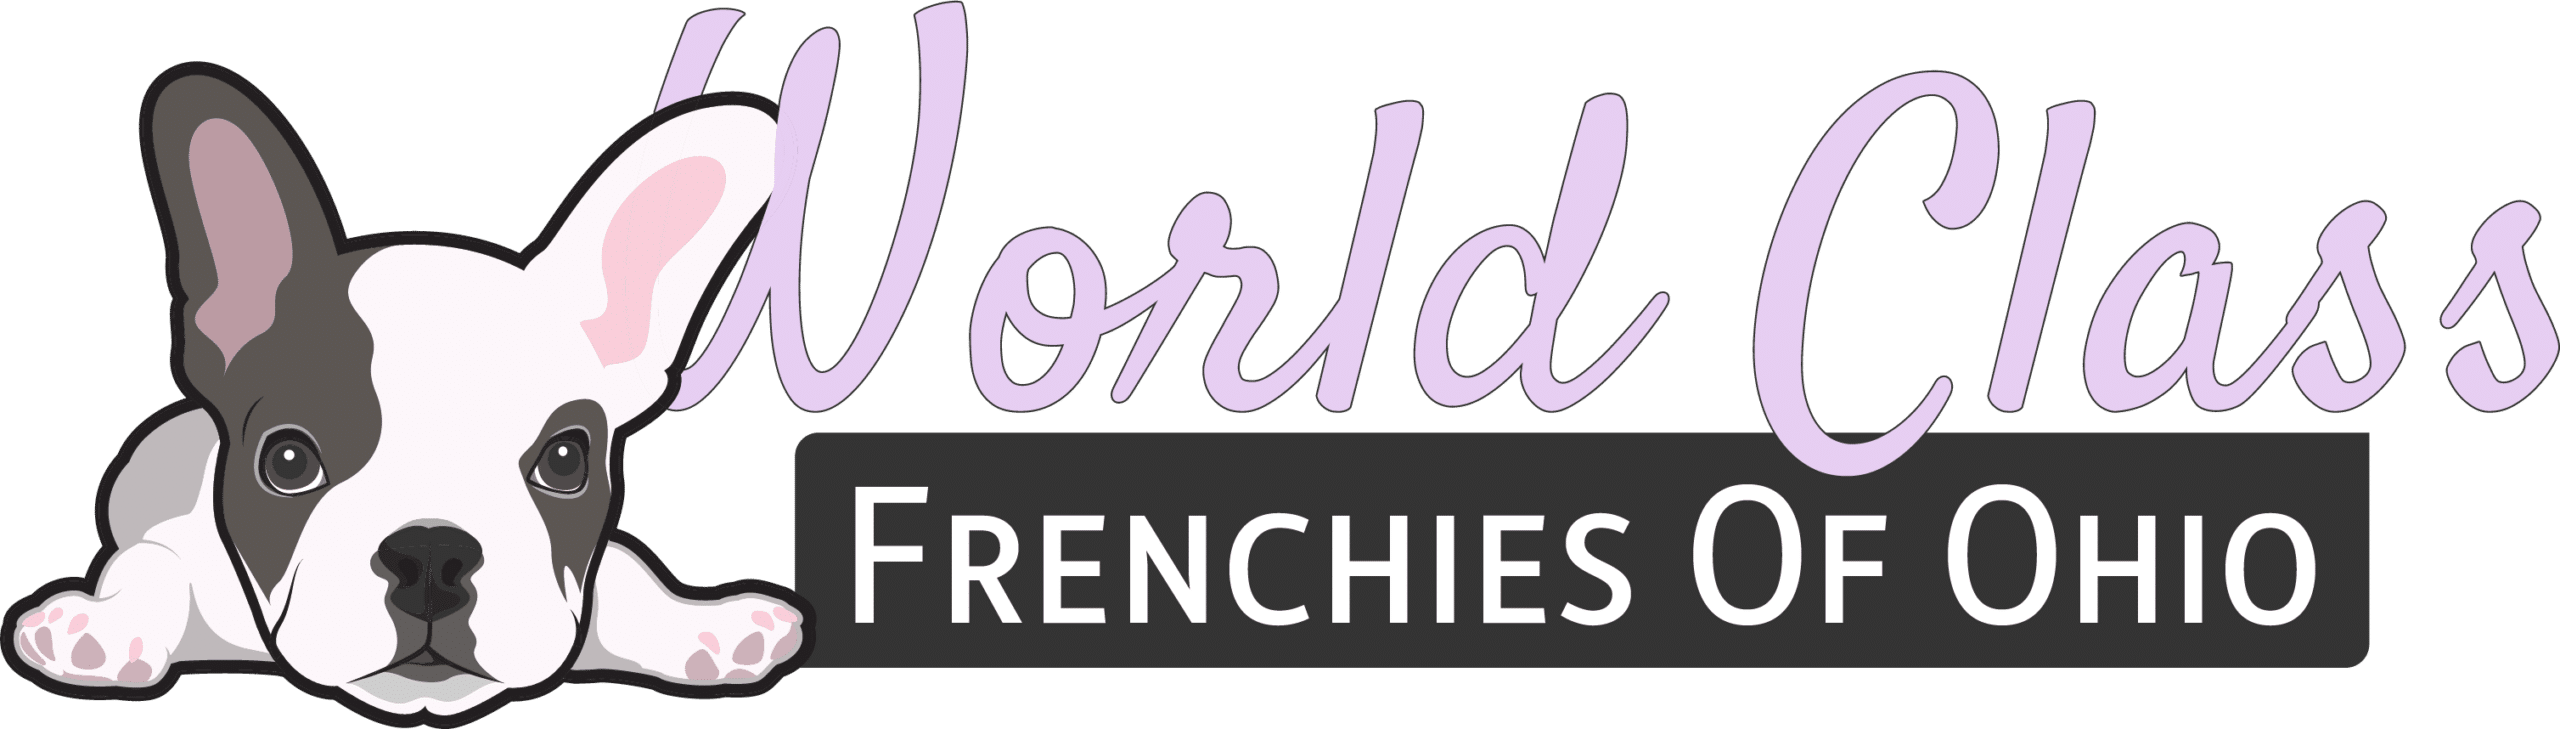 World Class Frenchies Of Ohio